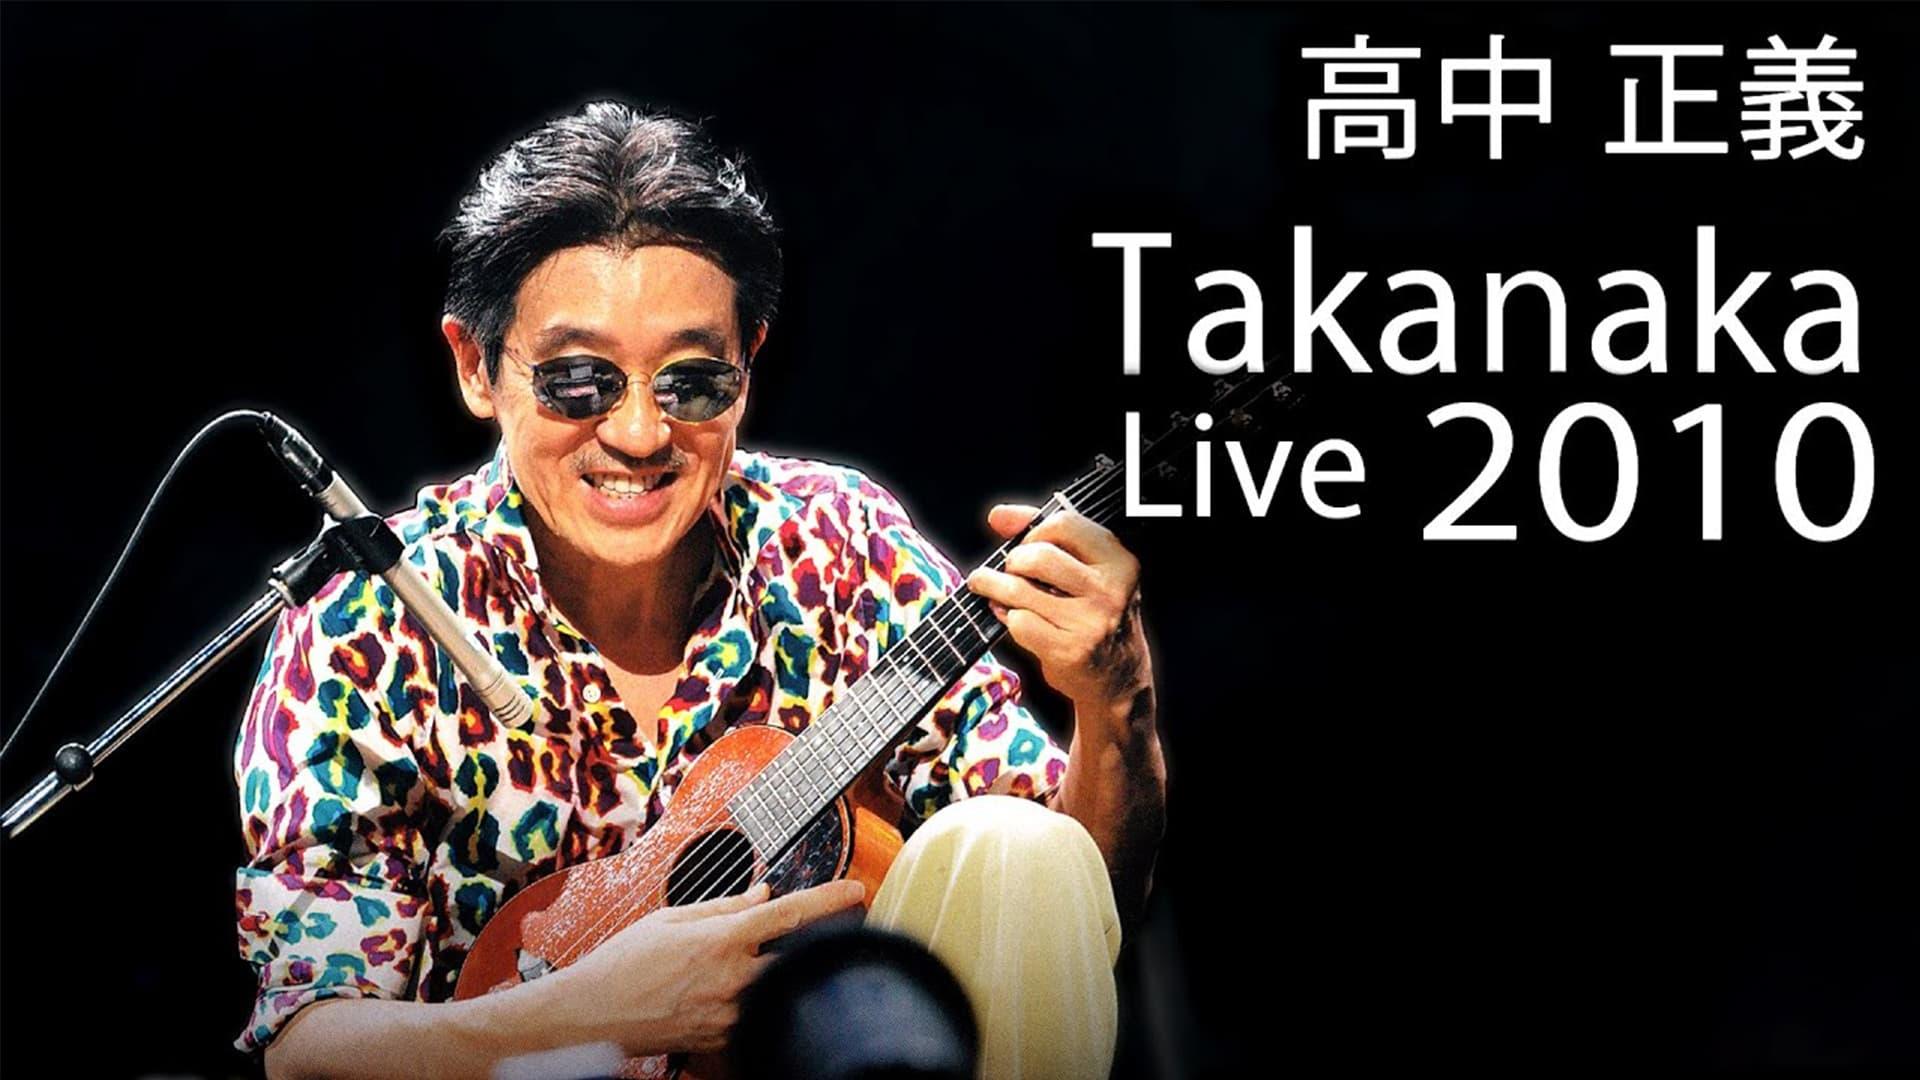 Masayoshi Takanaka - Super Live backdrop